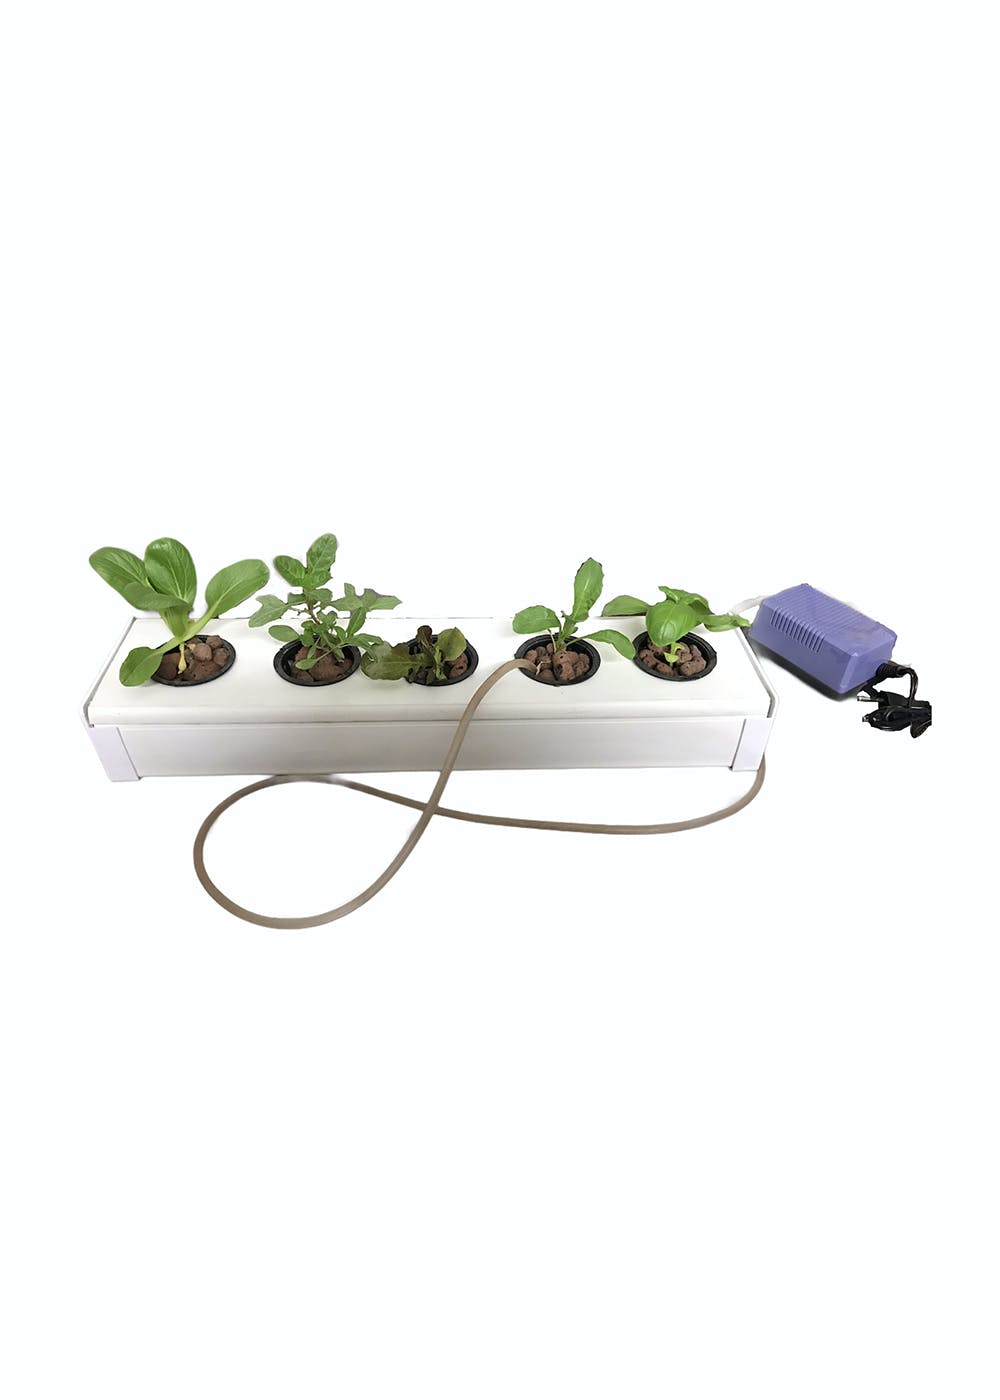 NutriTube 5 Planter - Hydroponic Home Grow Kit